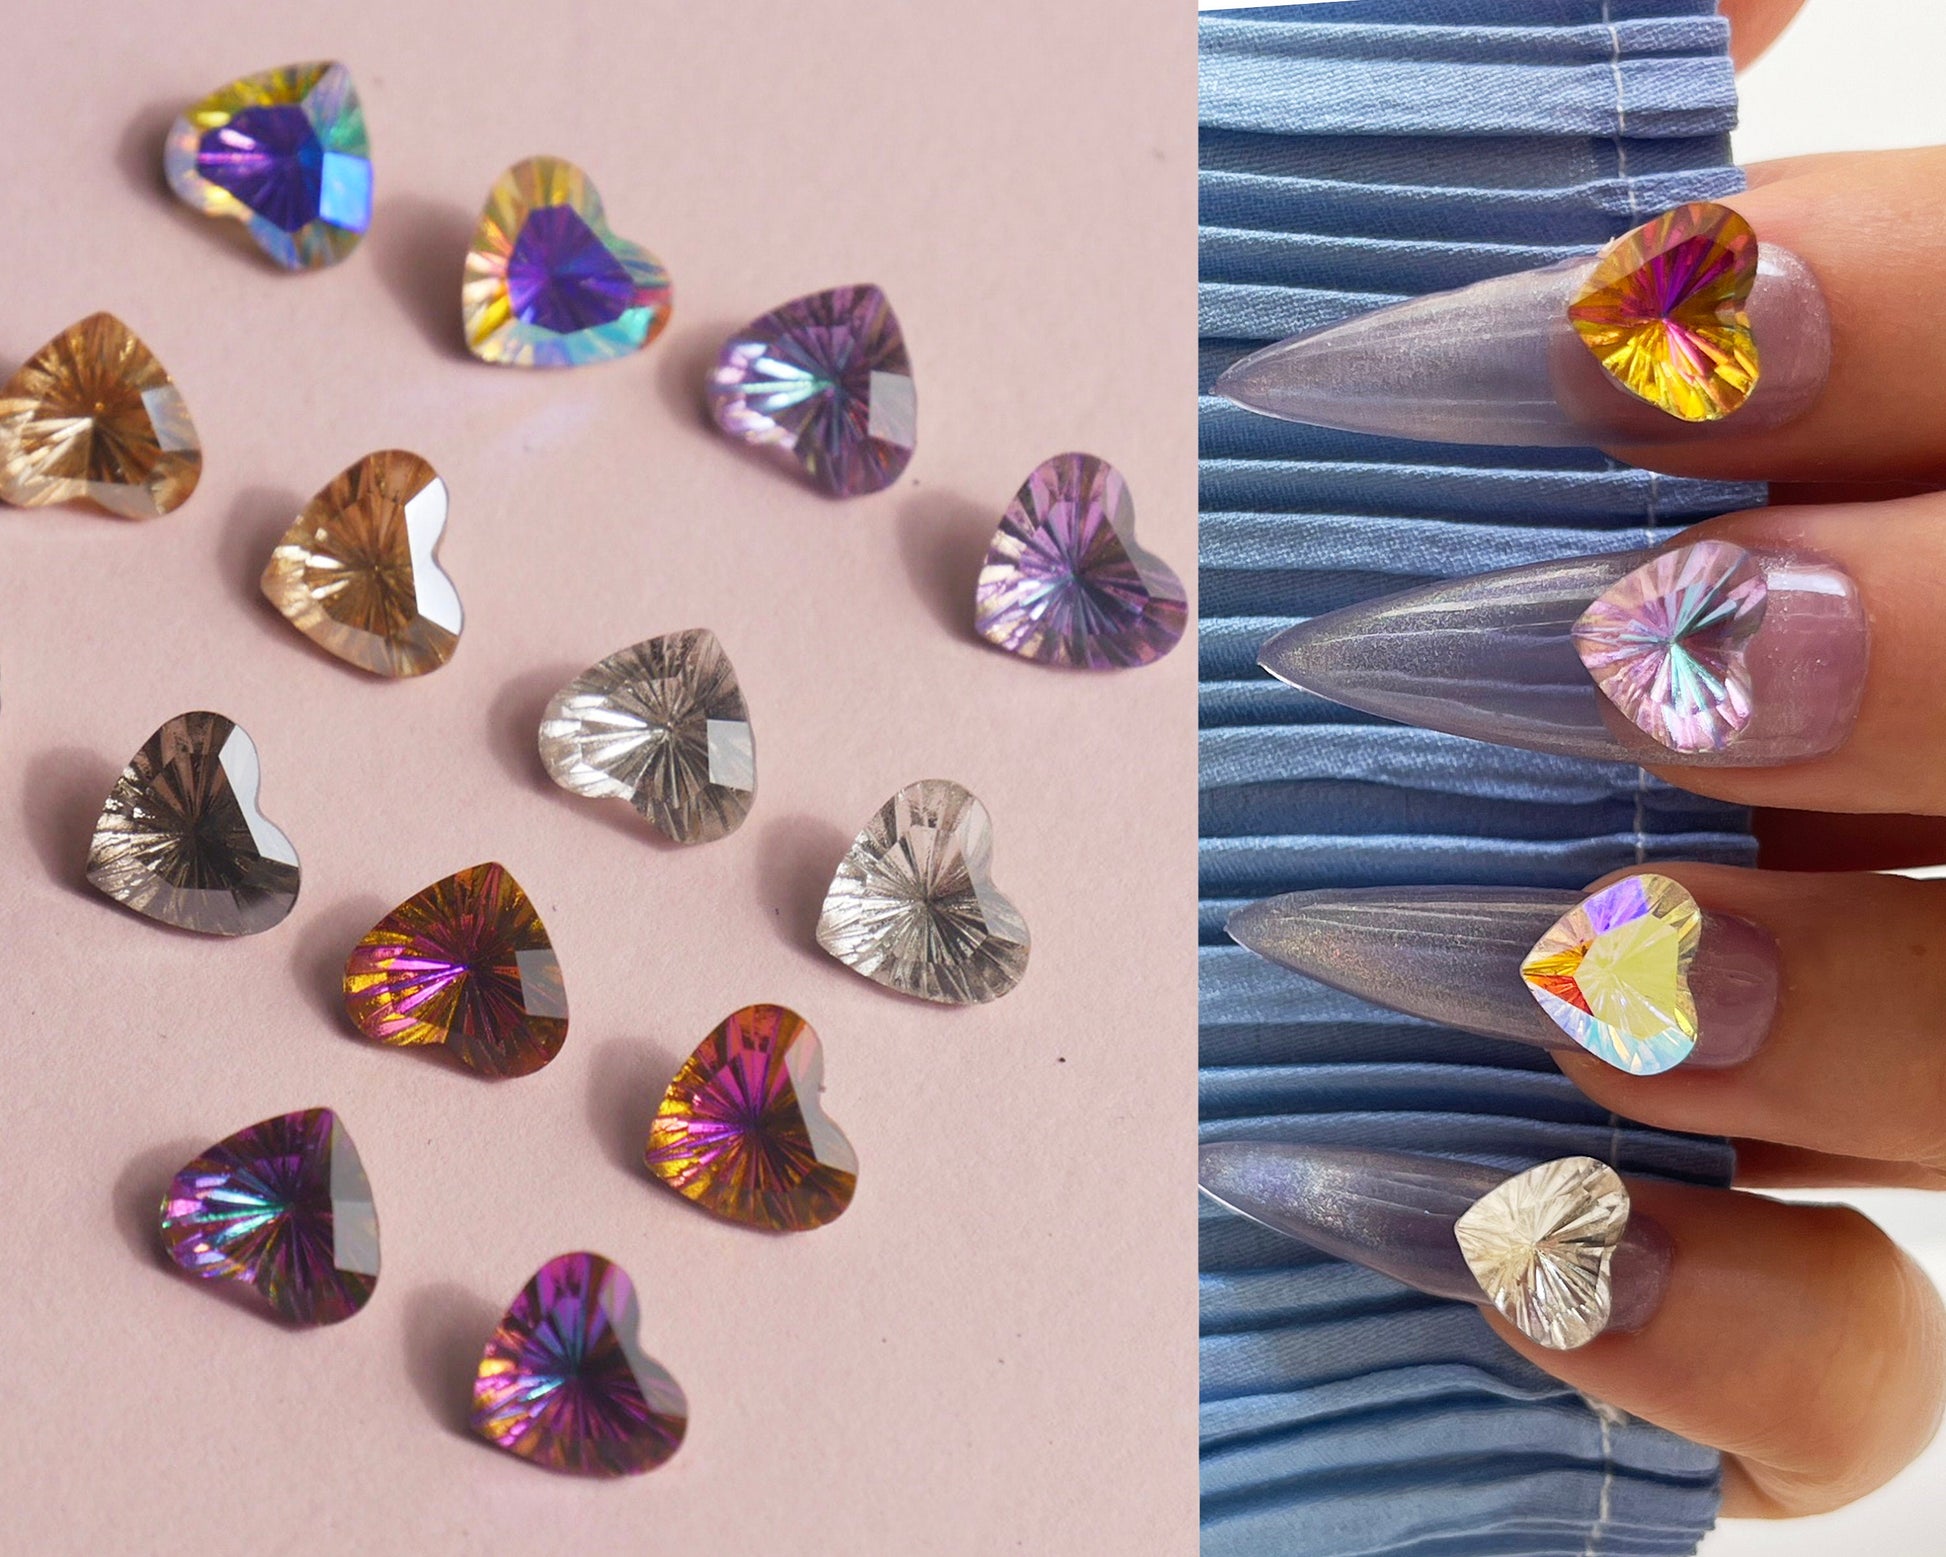 Diamond Heart Nail Jewelry Valentine 3D Nail Charms Nail Art Decoration DIY  Craft 